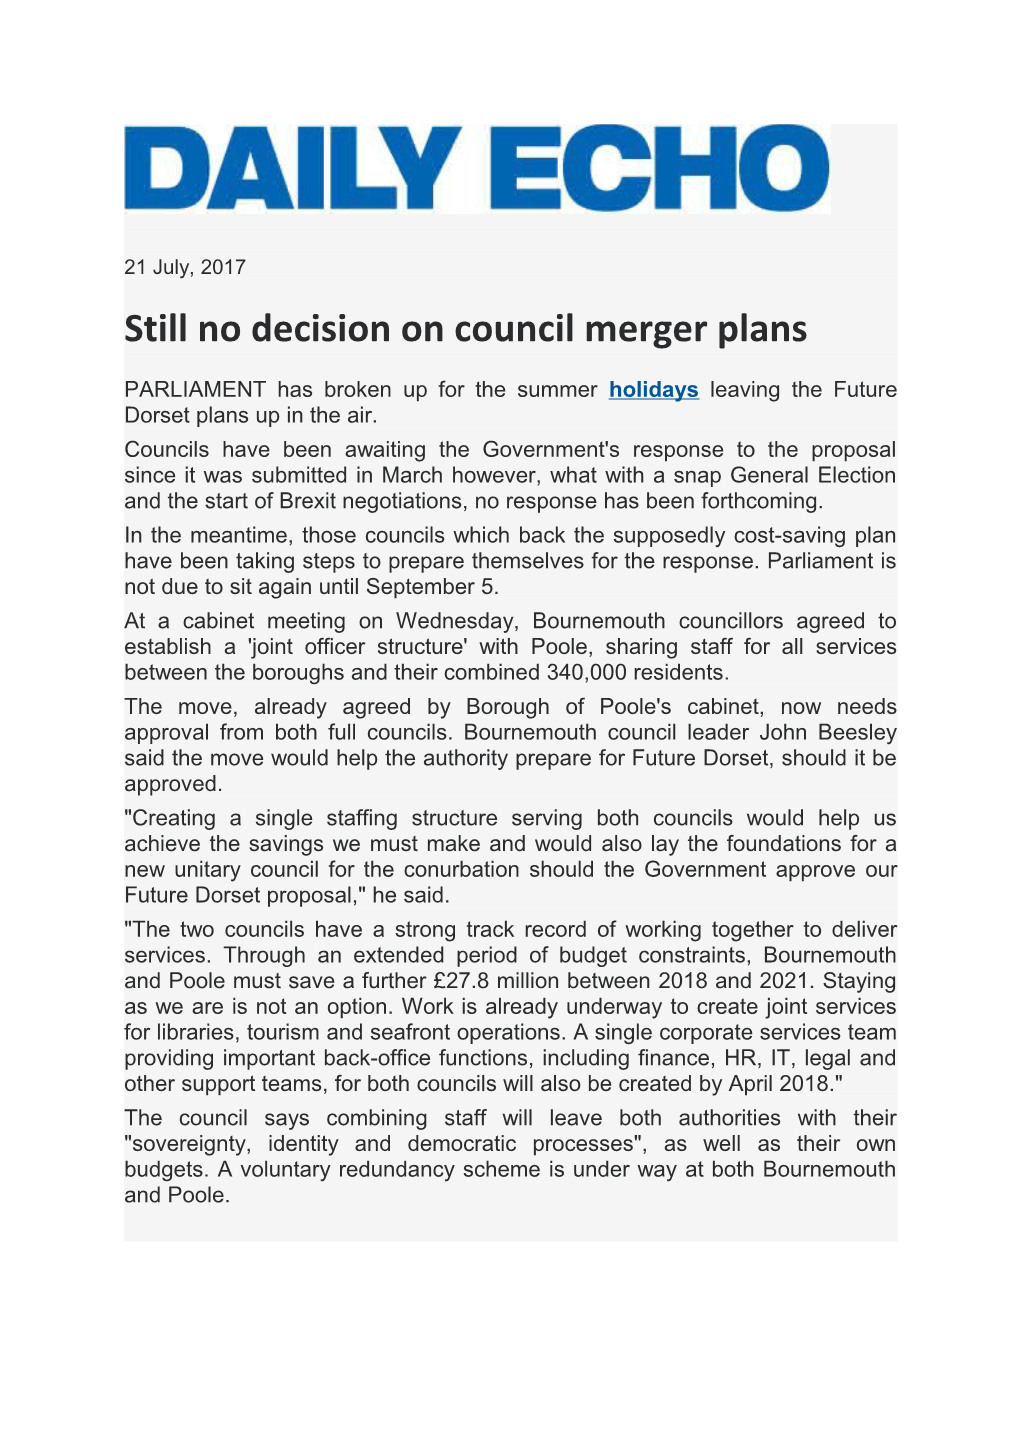 Still No Decision on Council Merger Plans